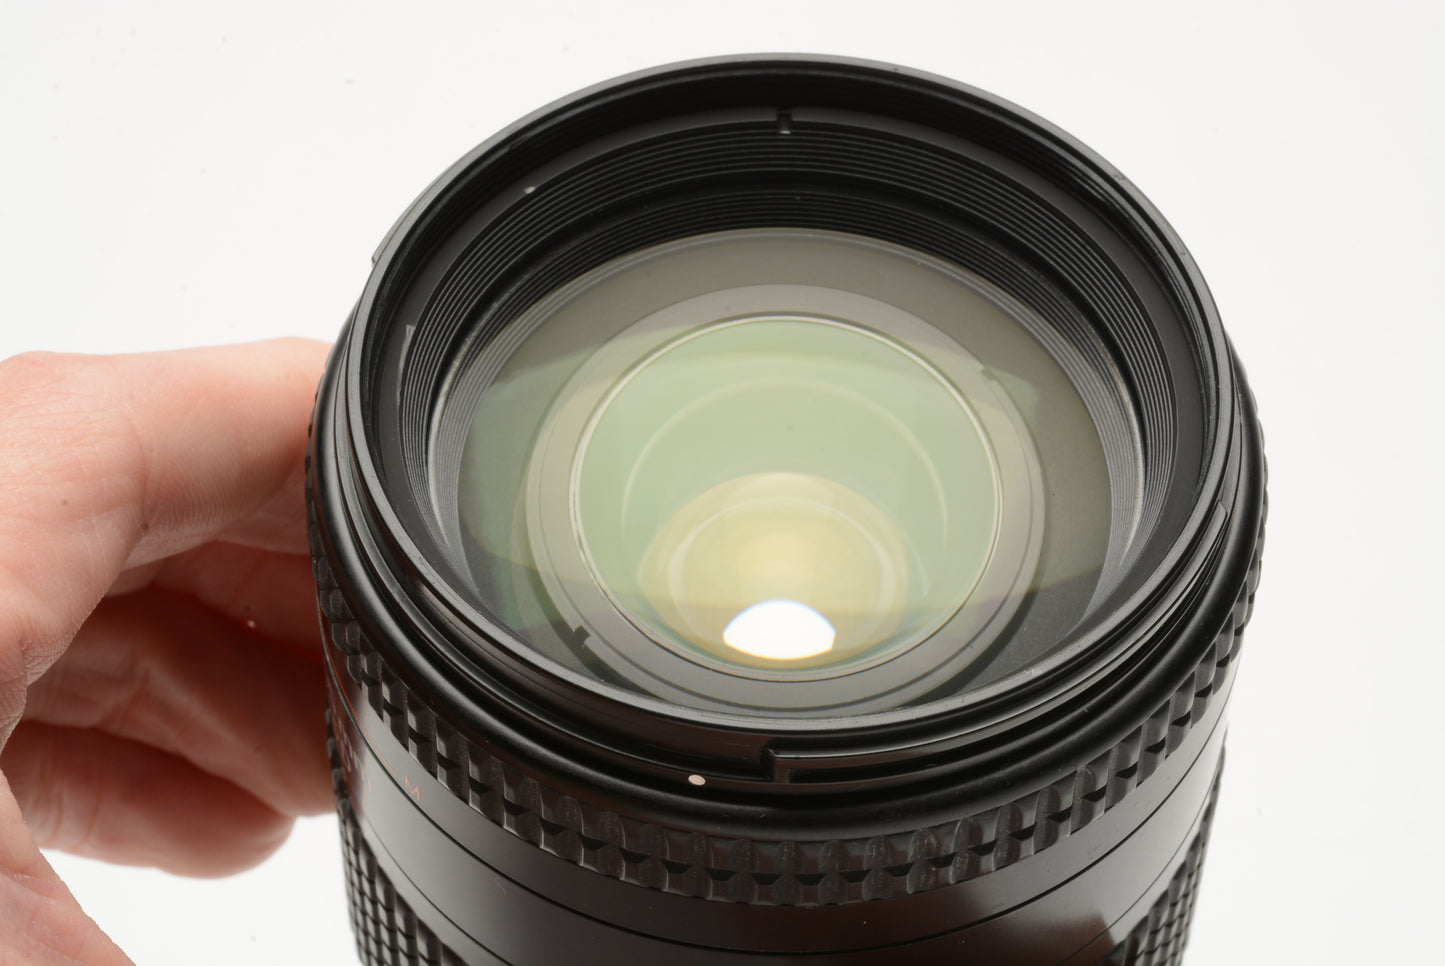 Nikon AF Nikkor 28-105mm f3.5-4.5D macro zoom lens, Caps + UV filter, Nice